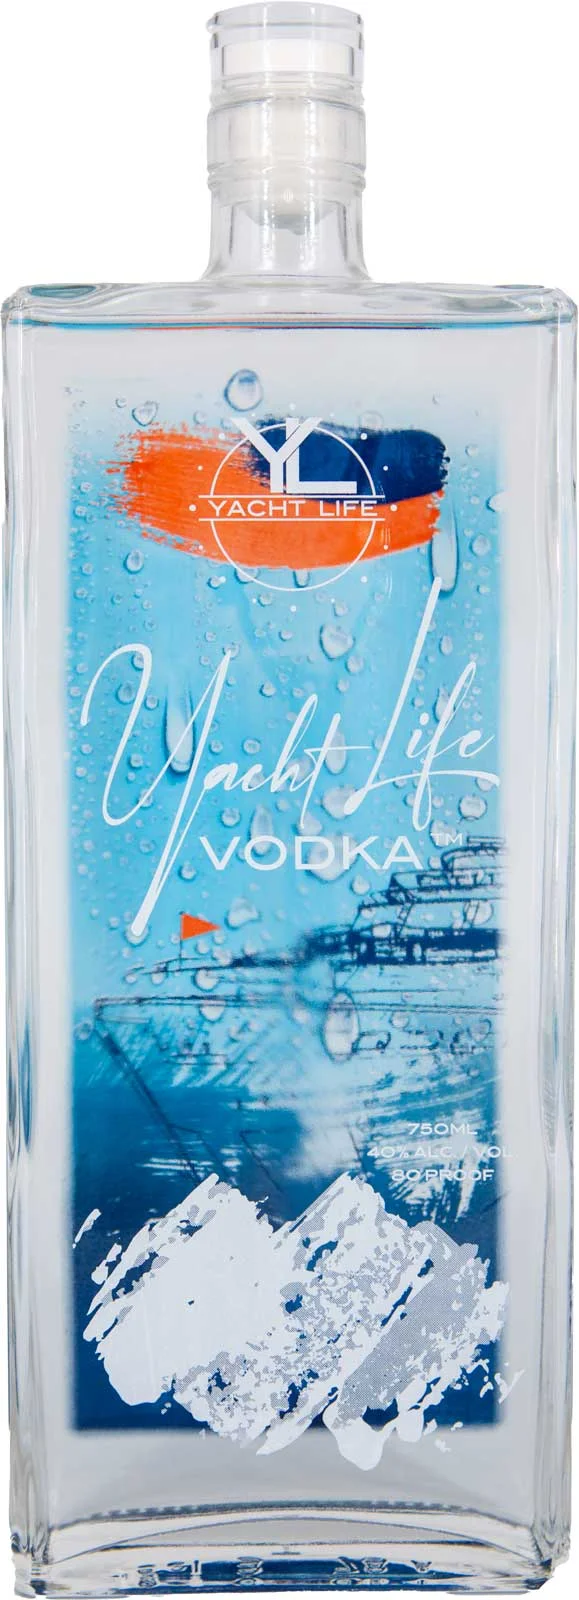 Yacht Life Vodka bottle